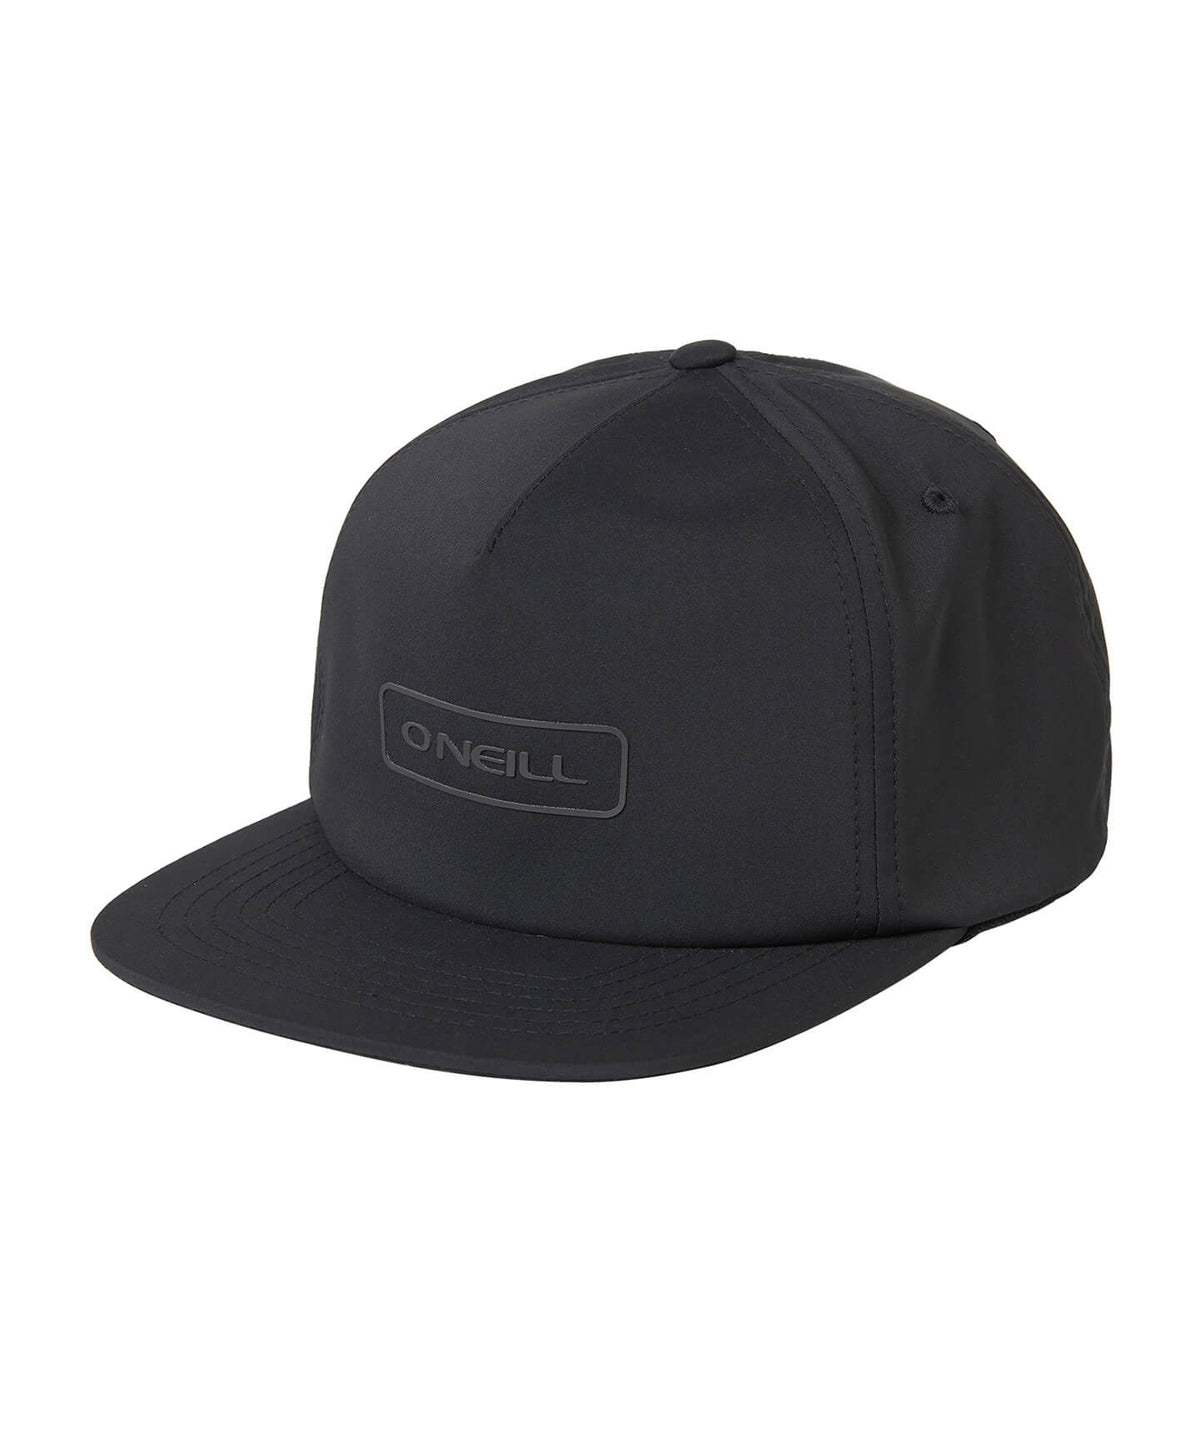 Hybrid Snapback Cap - Black